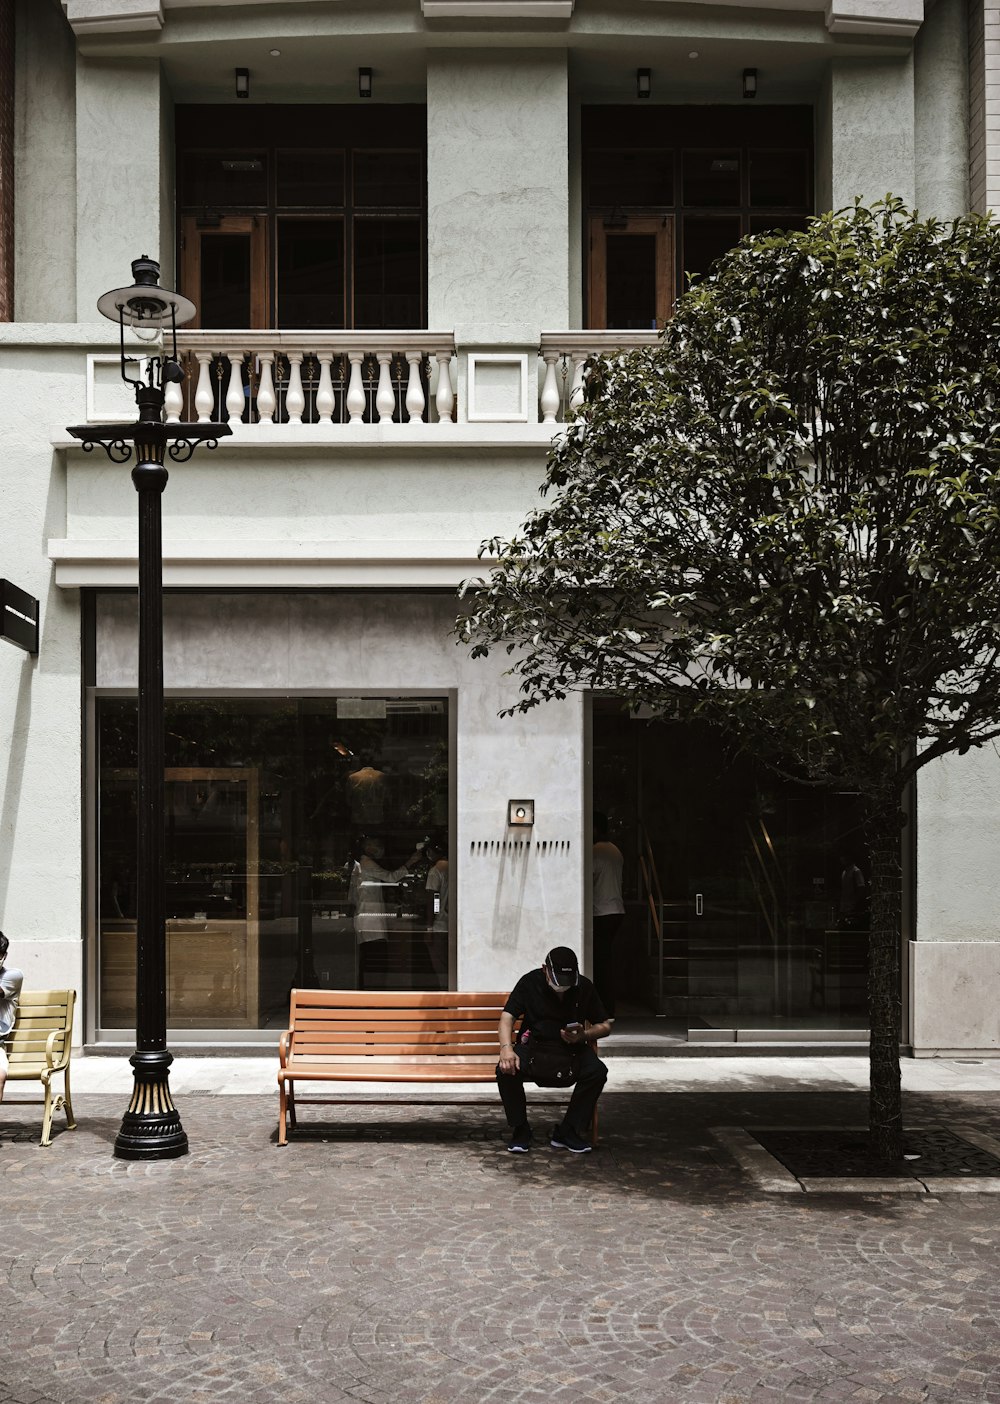 man in black jacket sitting on bench near tree